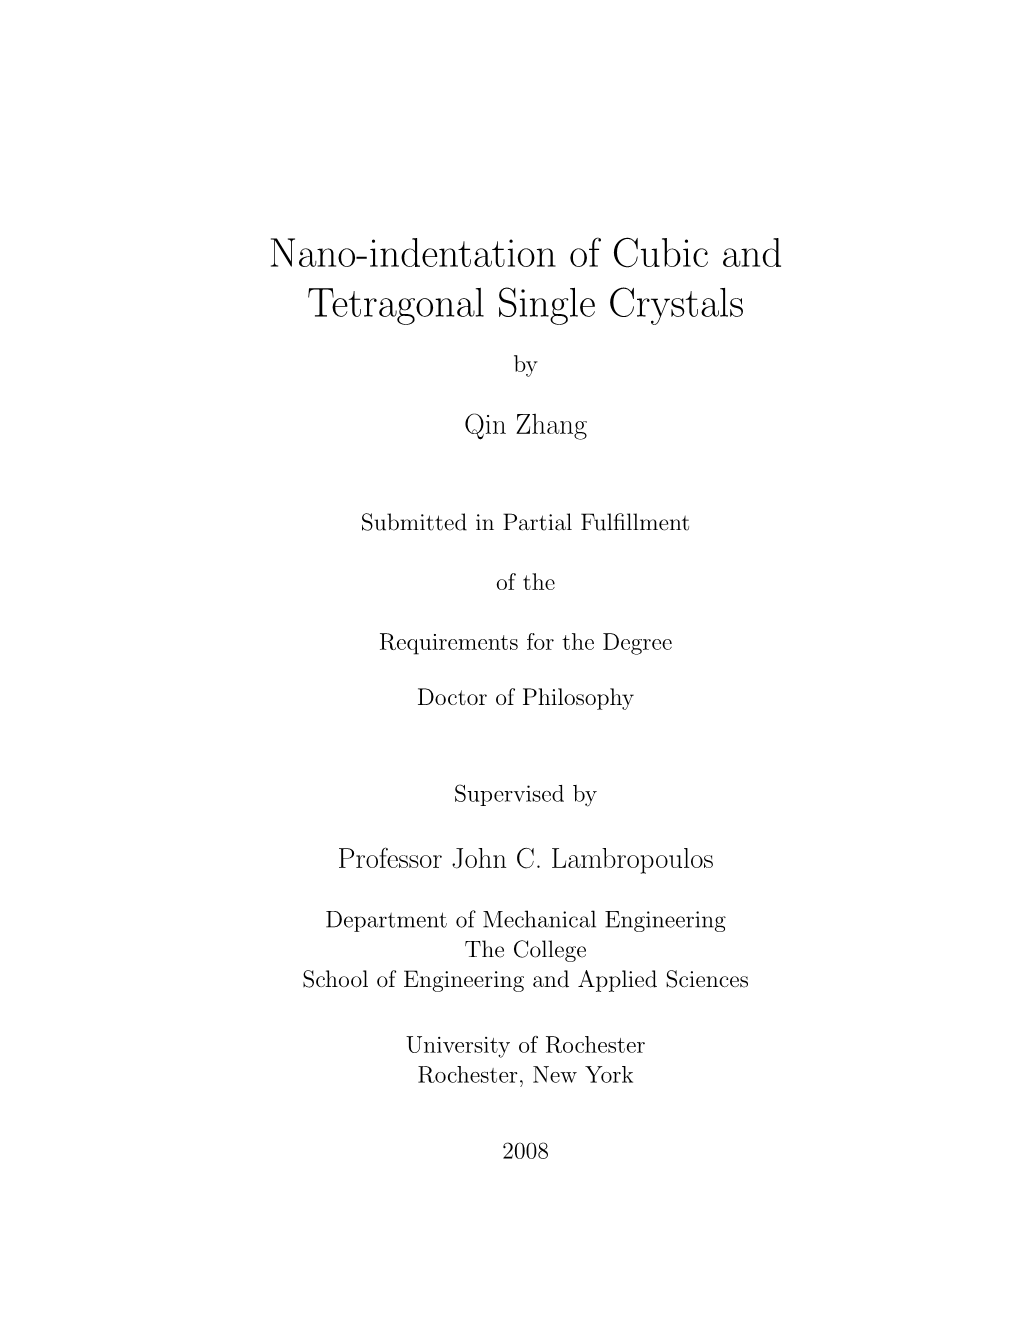 Nano-Indentation of Cubic and Tetragonal Single Crystals